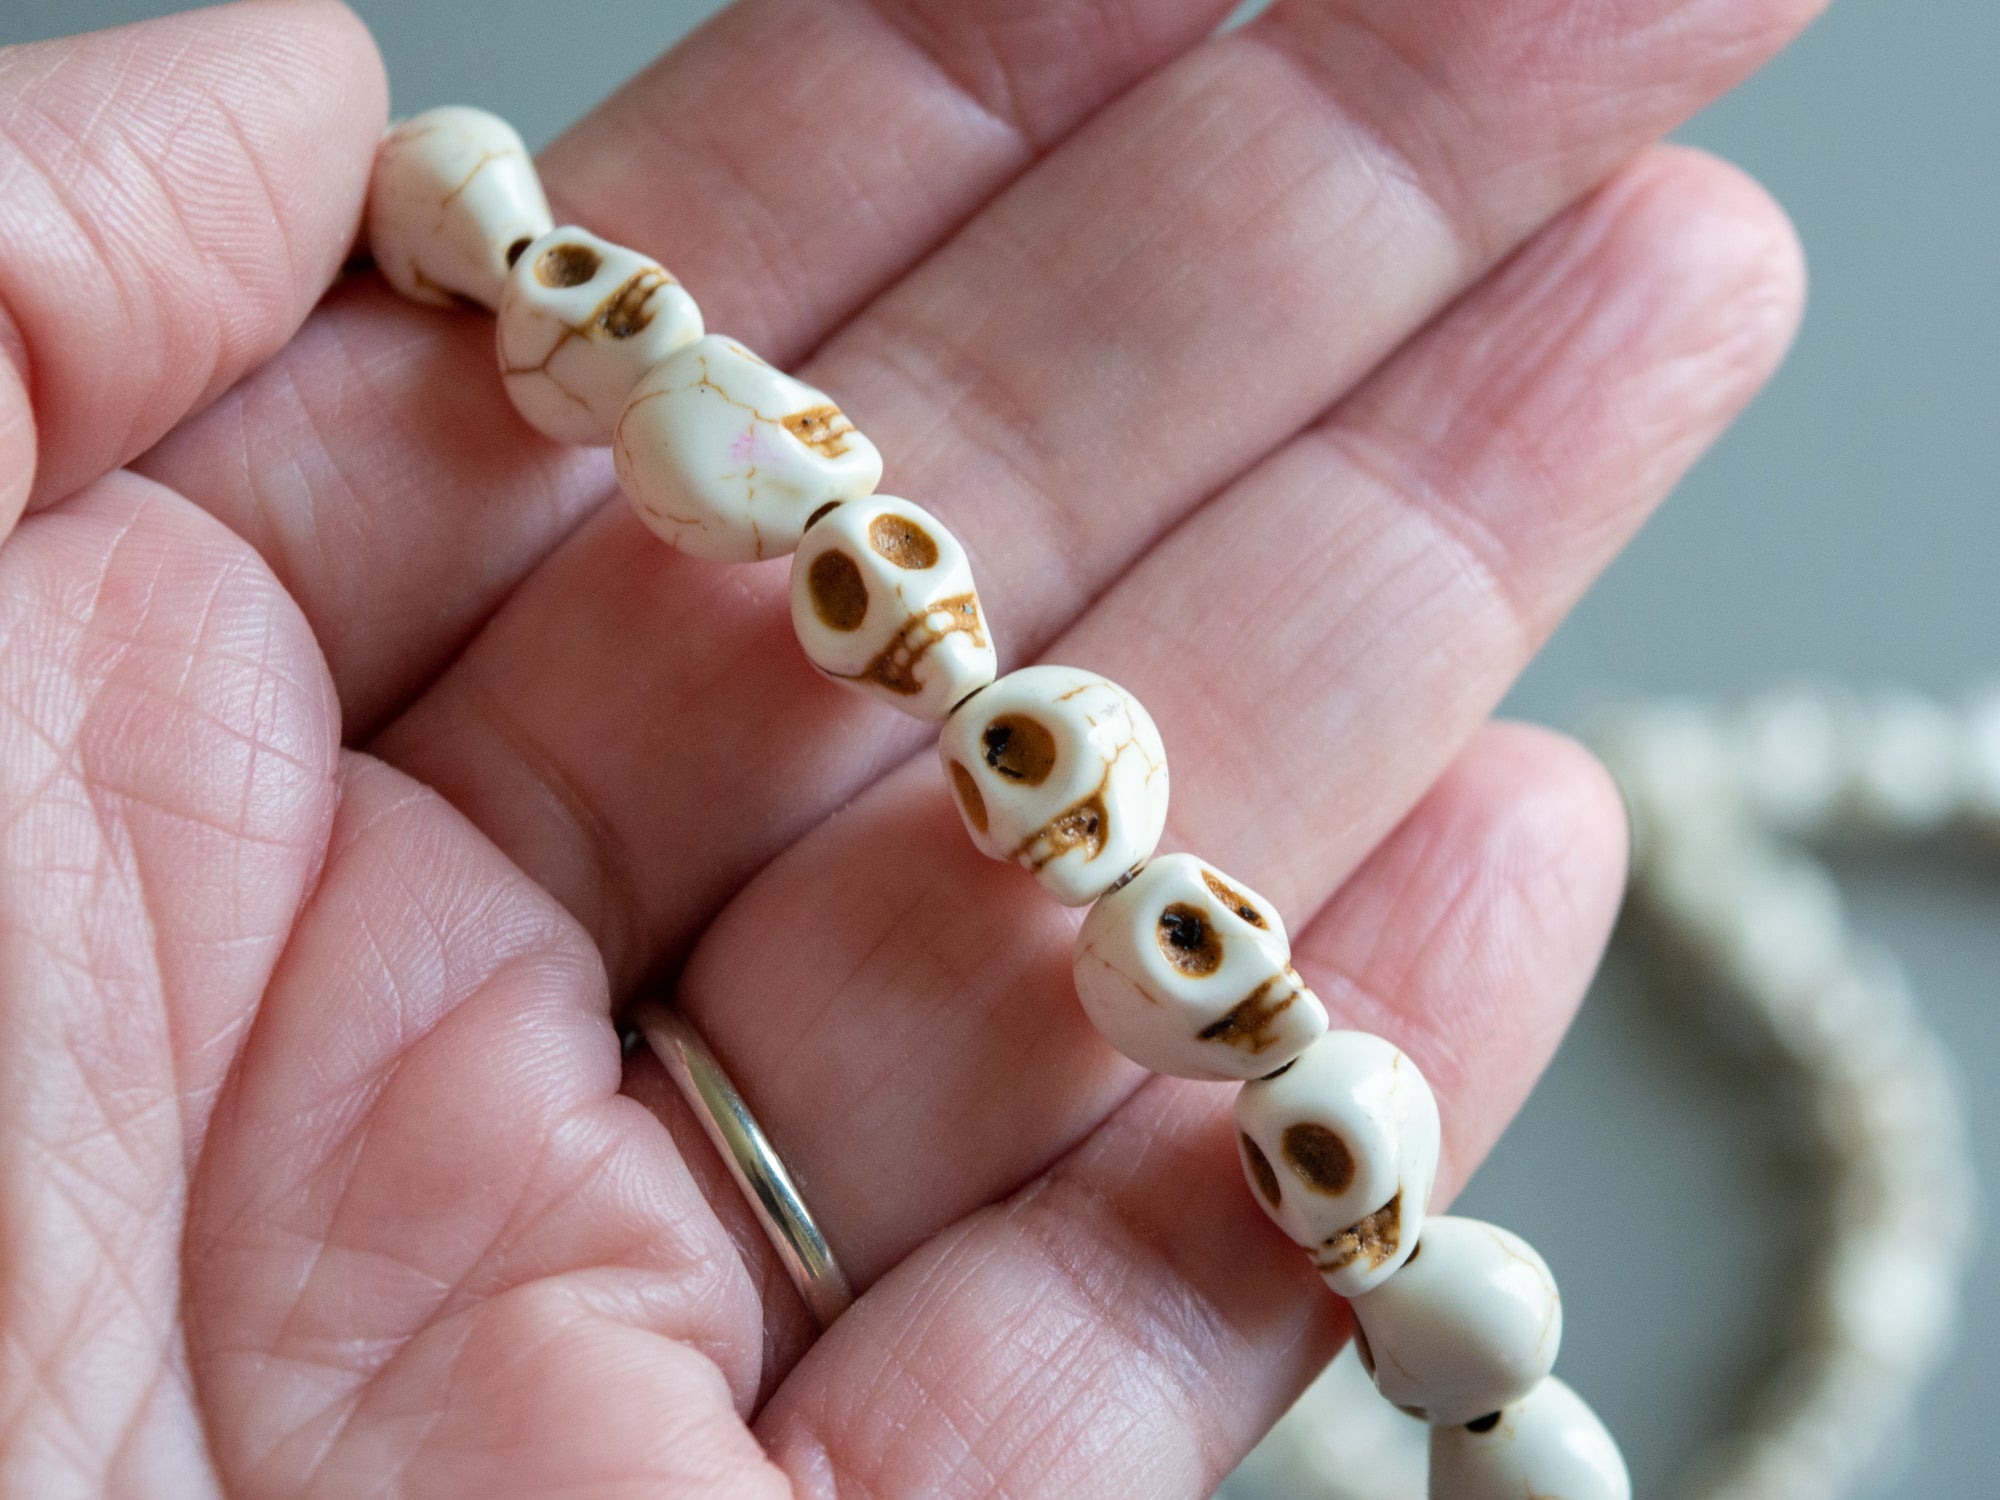 10mm Skull Beads in Faux Howlite, Fun Lightweight Halloween Skeleton Beads  15 Strand